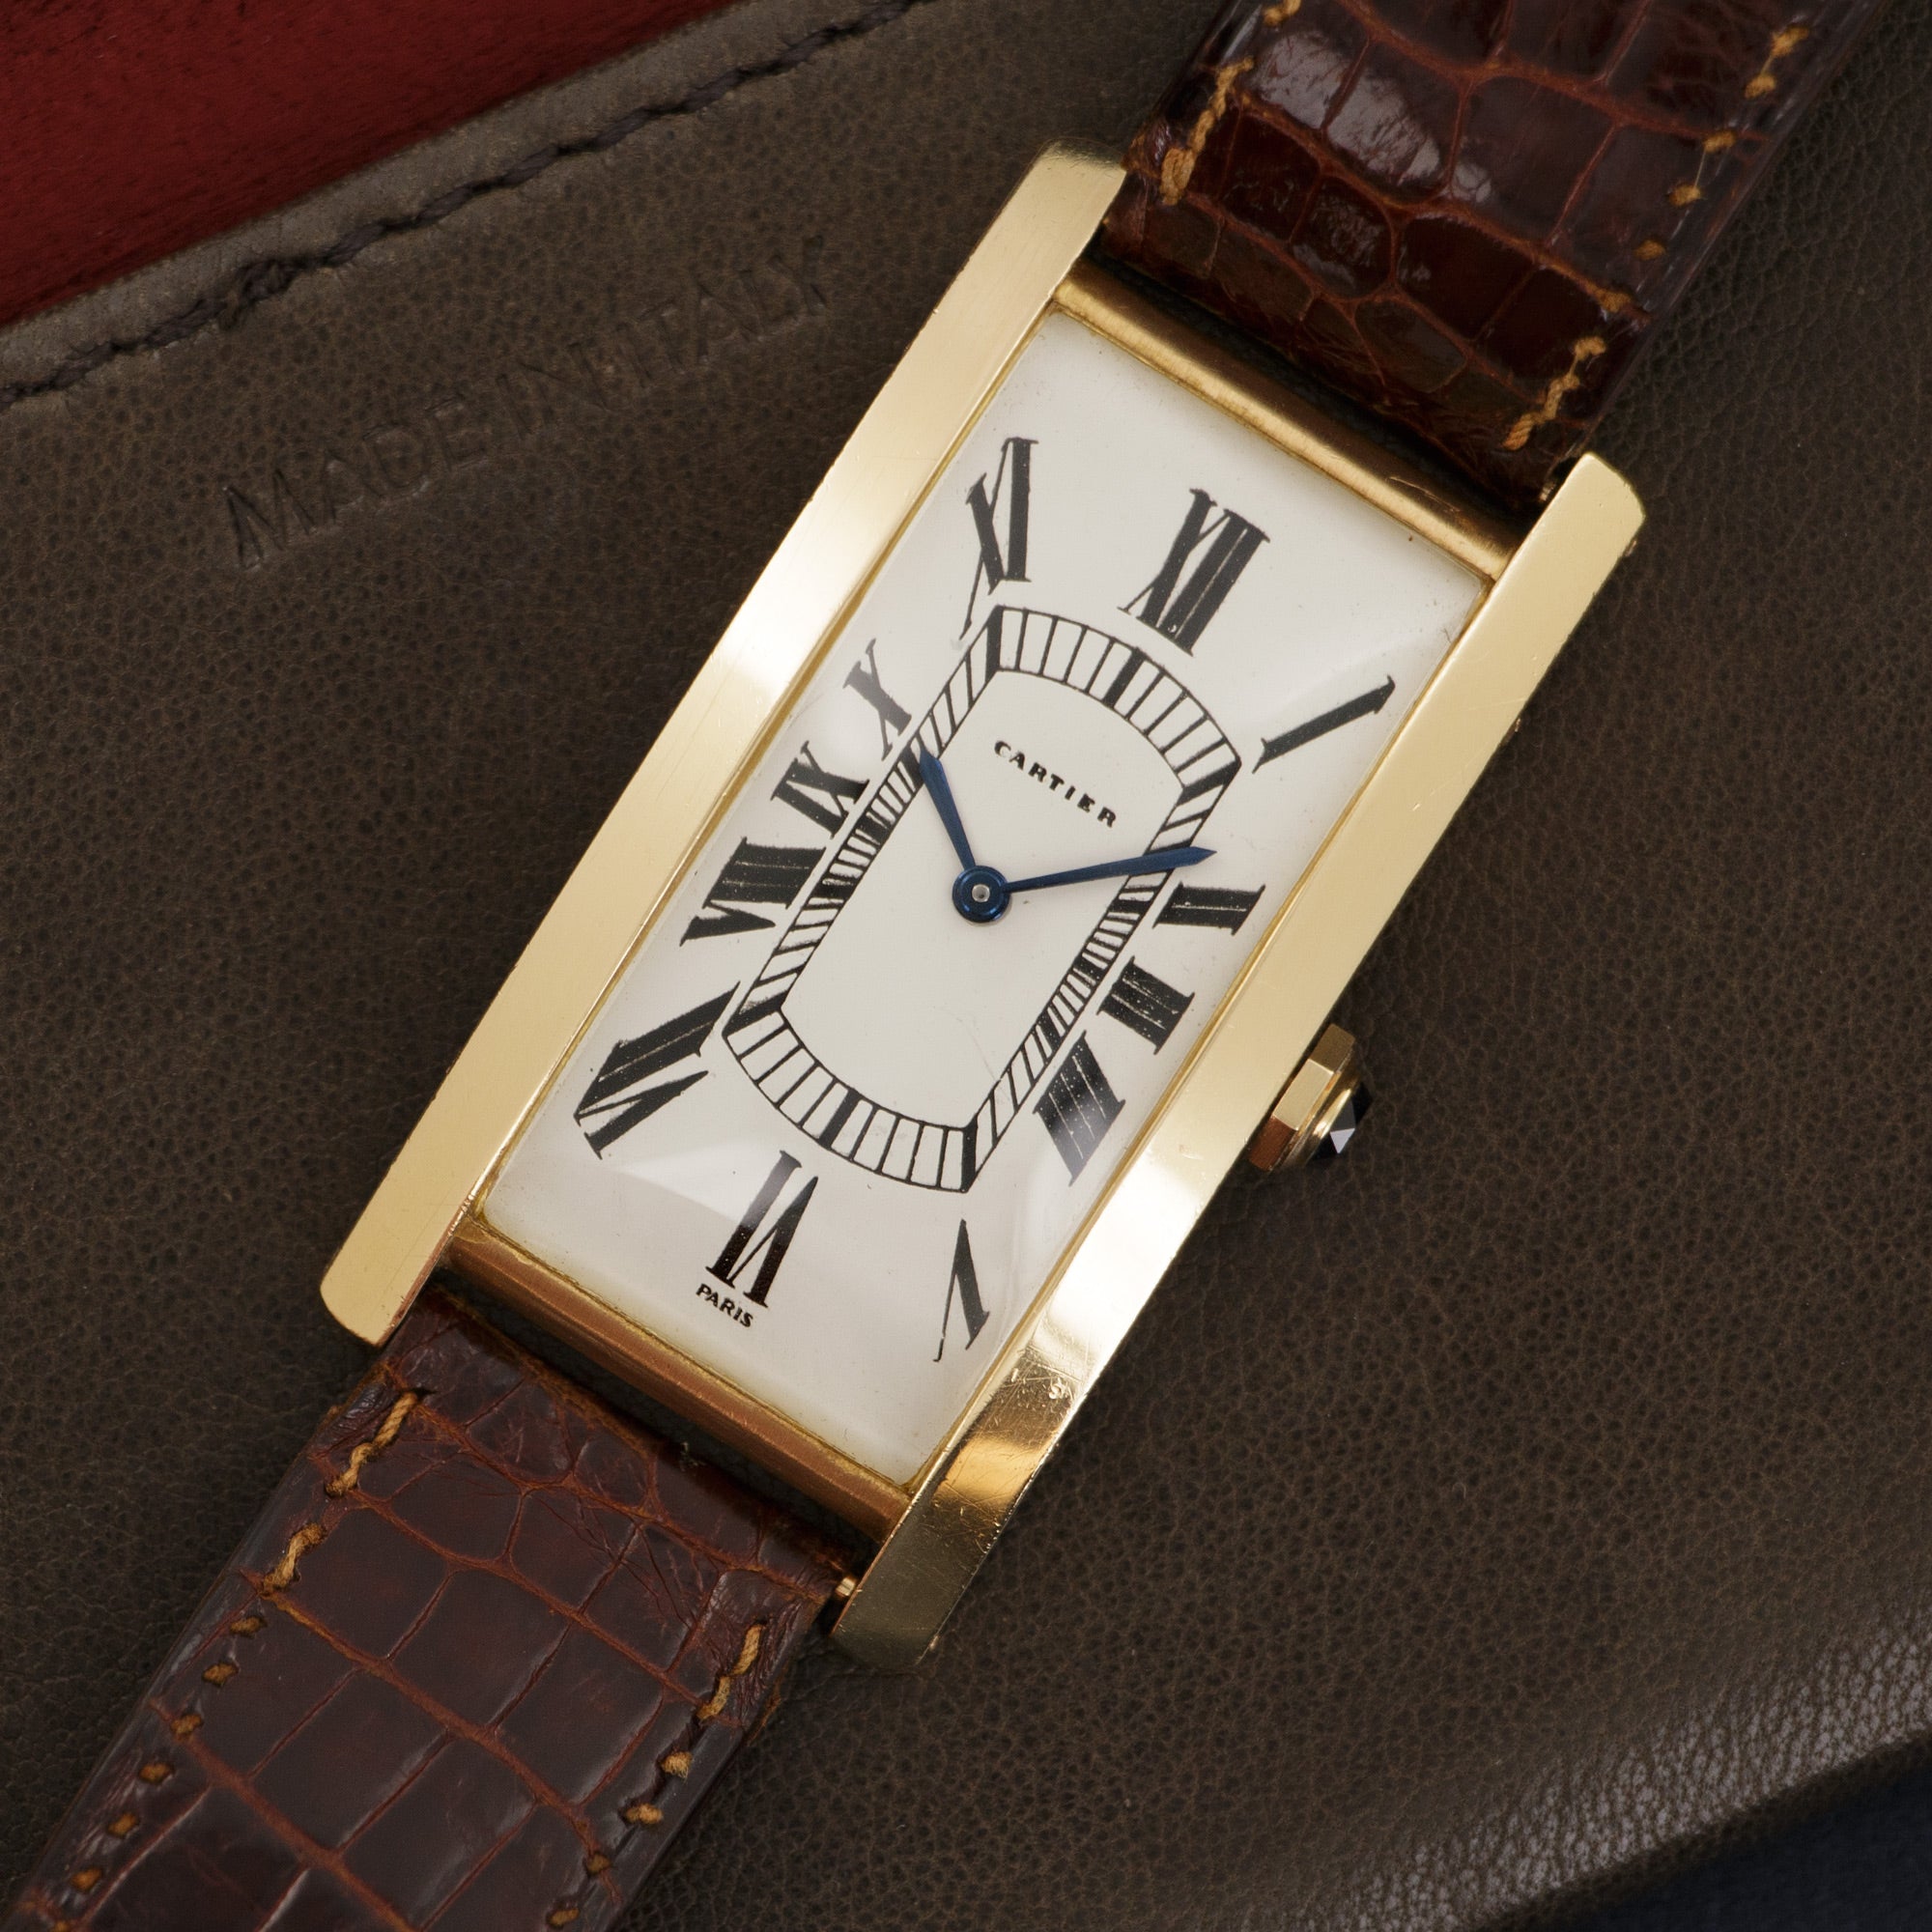 Cartier - Cartier Yellow Gold Tank Cintree Watch, Circa 1970 - The Keystone Watches